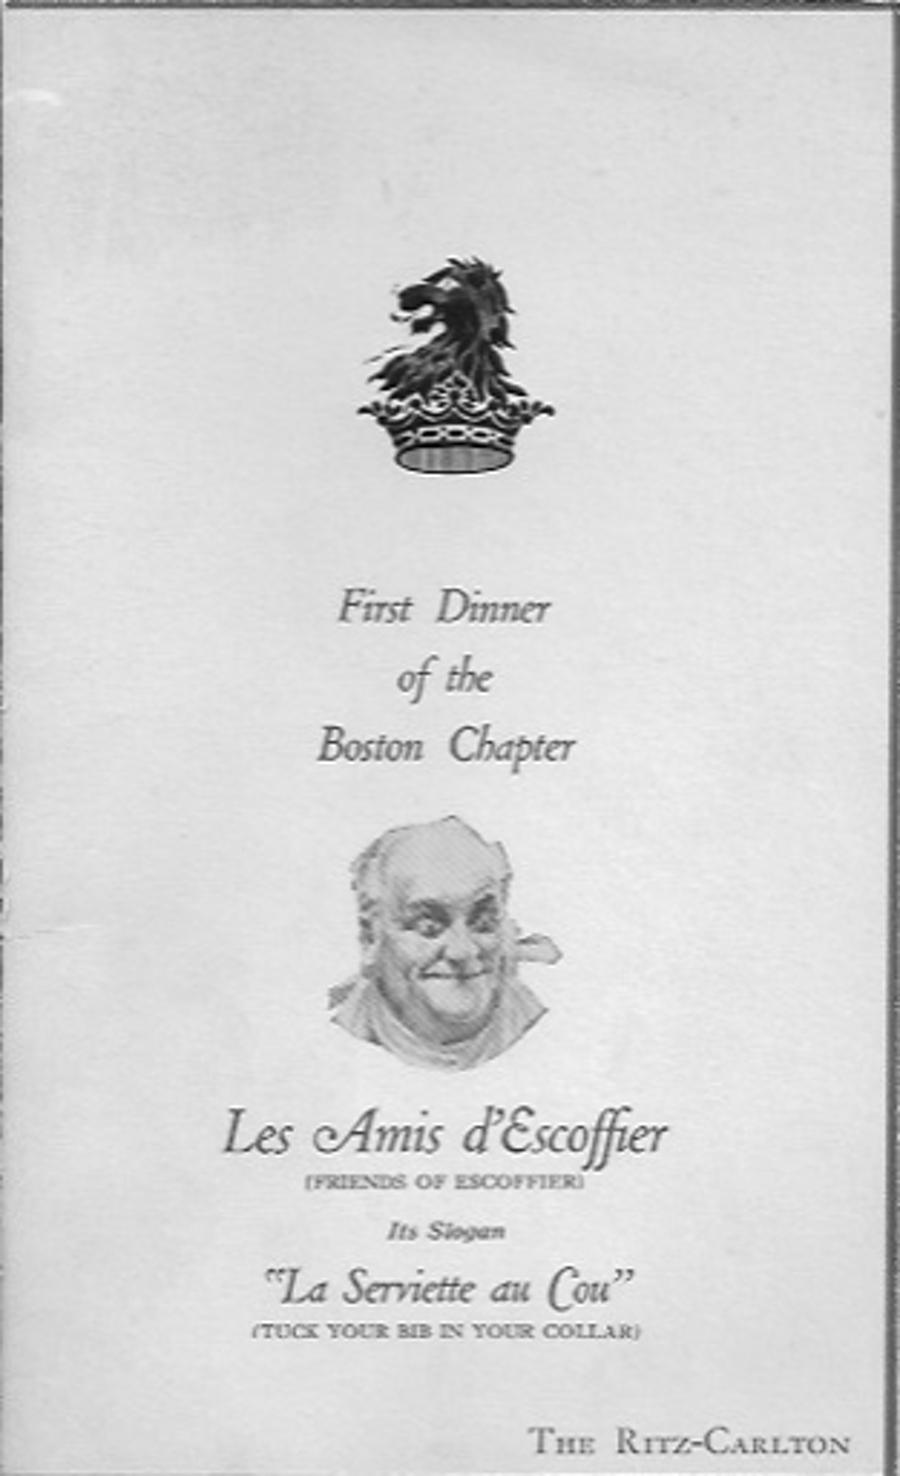 Les Amis d'Escoffier Society of New York, Inc.